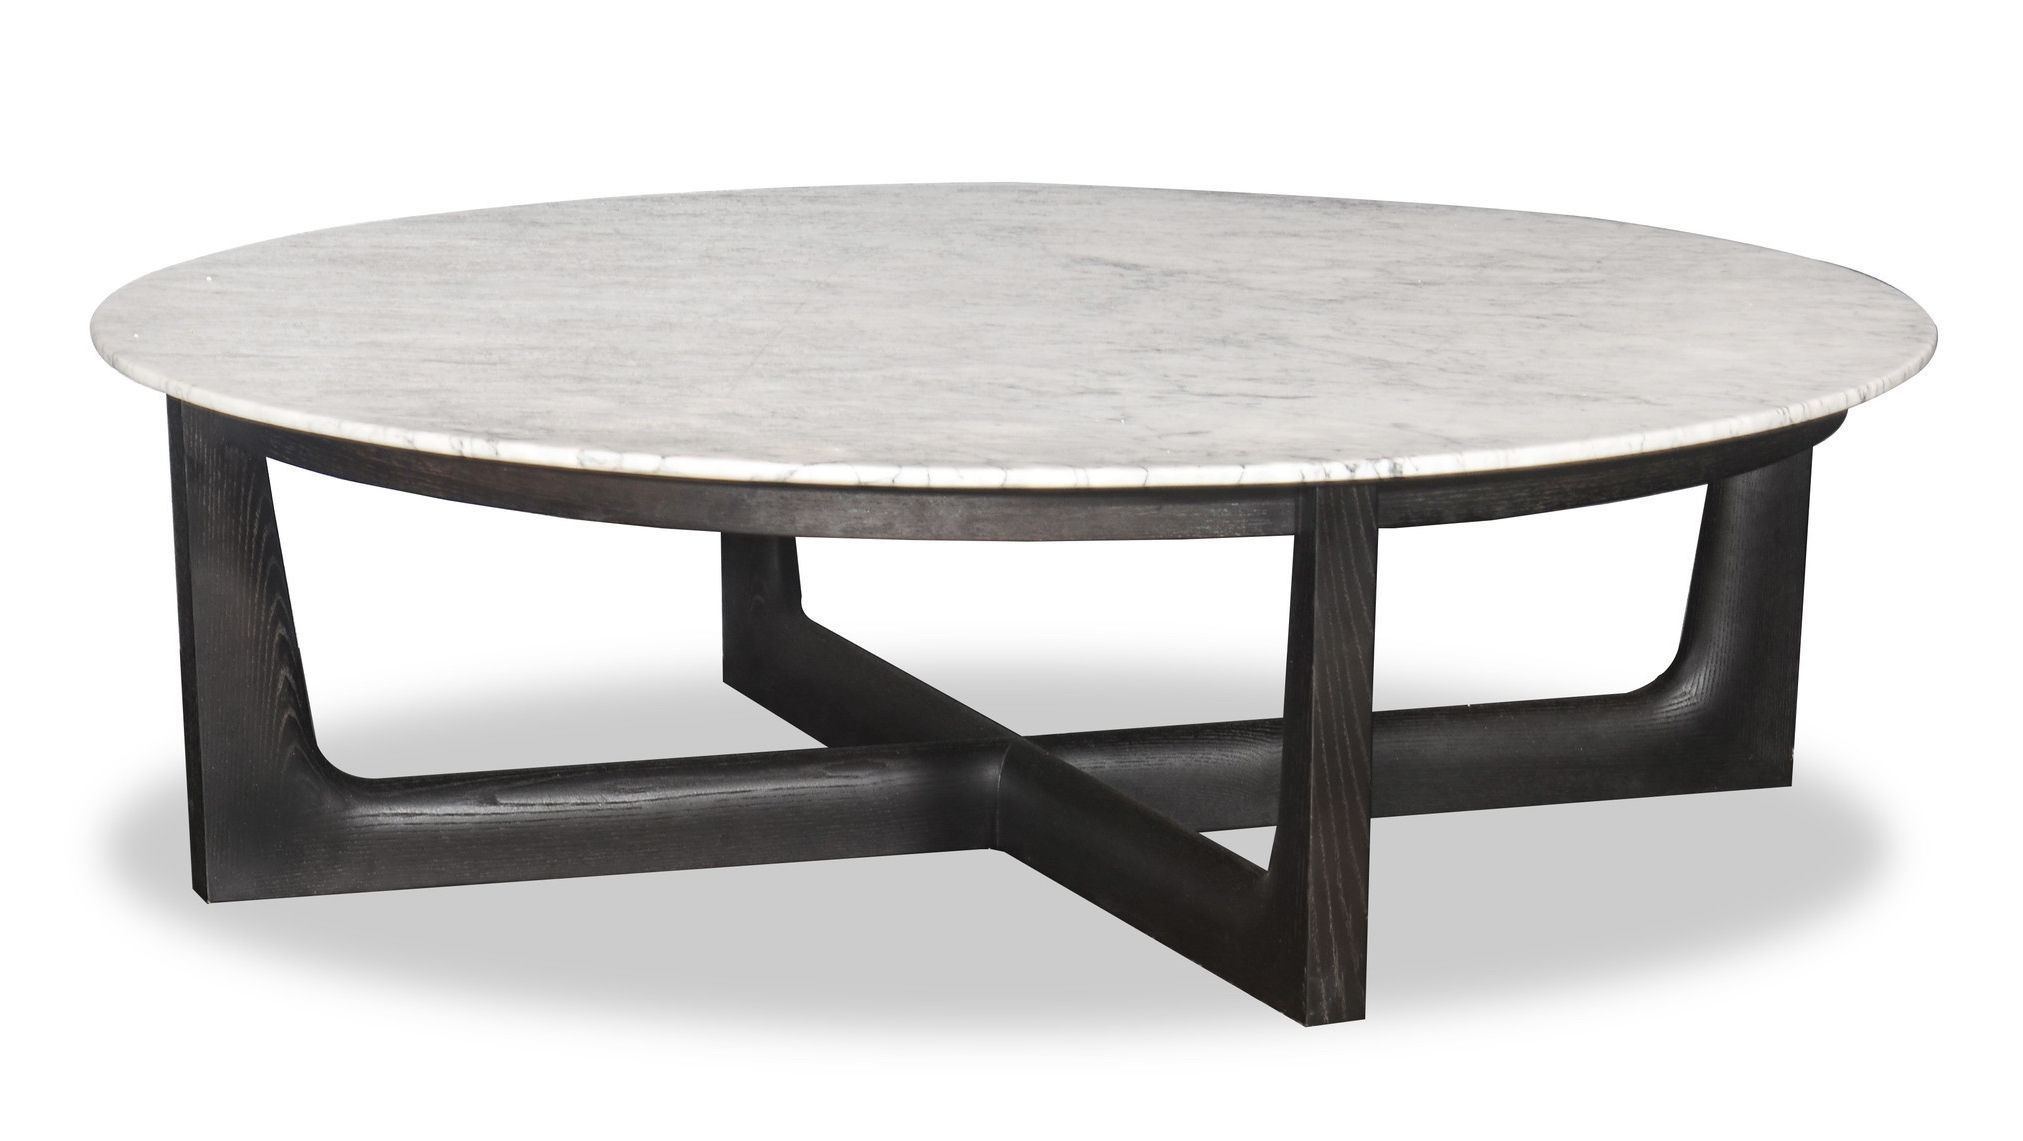 Preferred Brio Coffee Table White Marble – The Grand Interior With White Marble Coffee Tables (View 2 of 20)